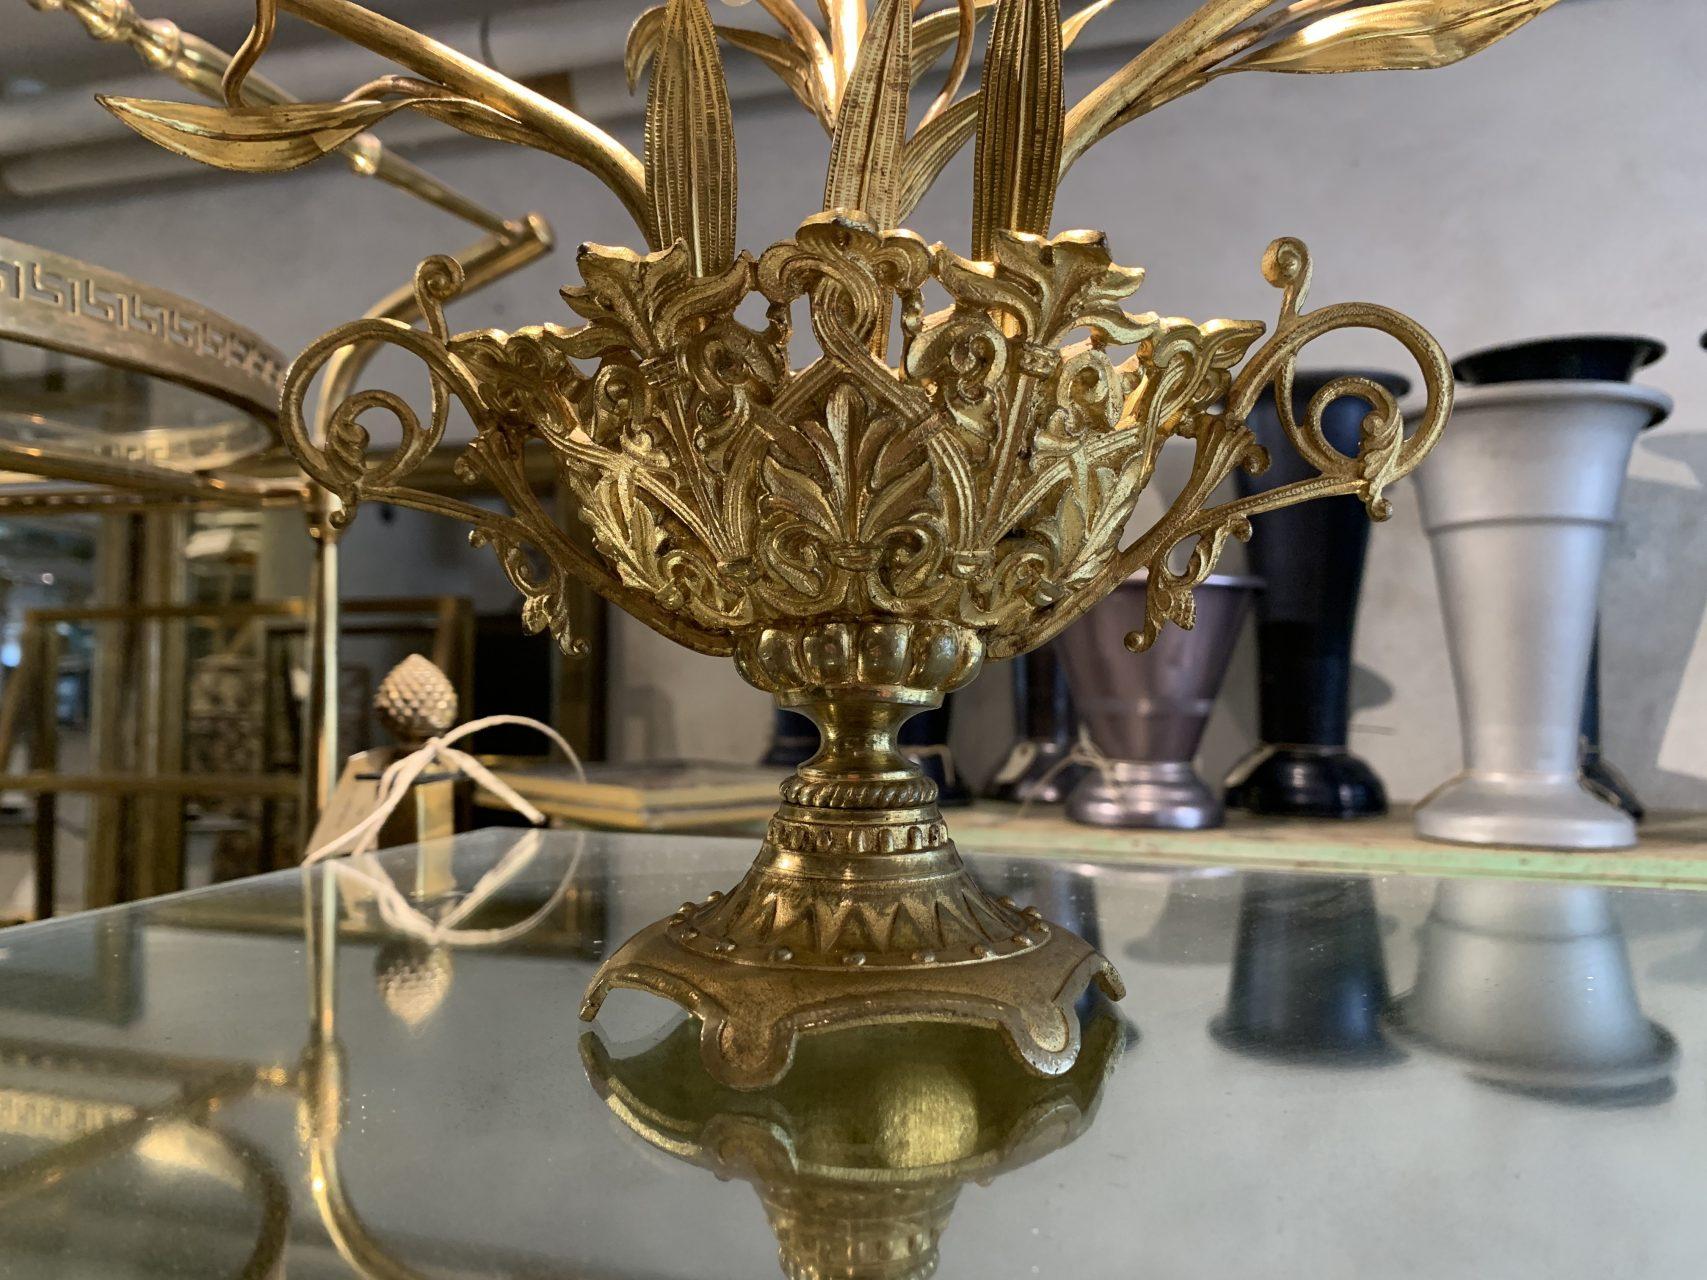 Brass Antique French Candelabra or Alter Ornament, circa 1890